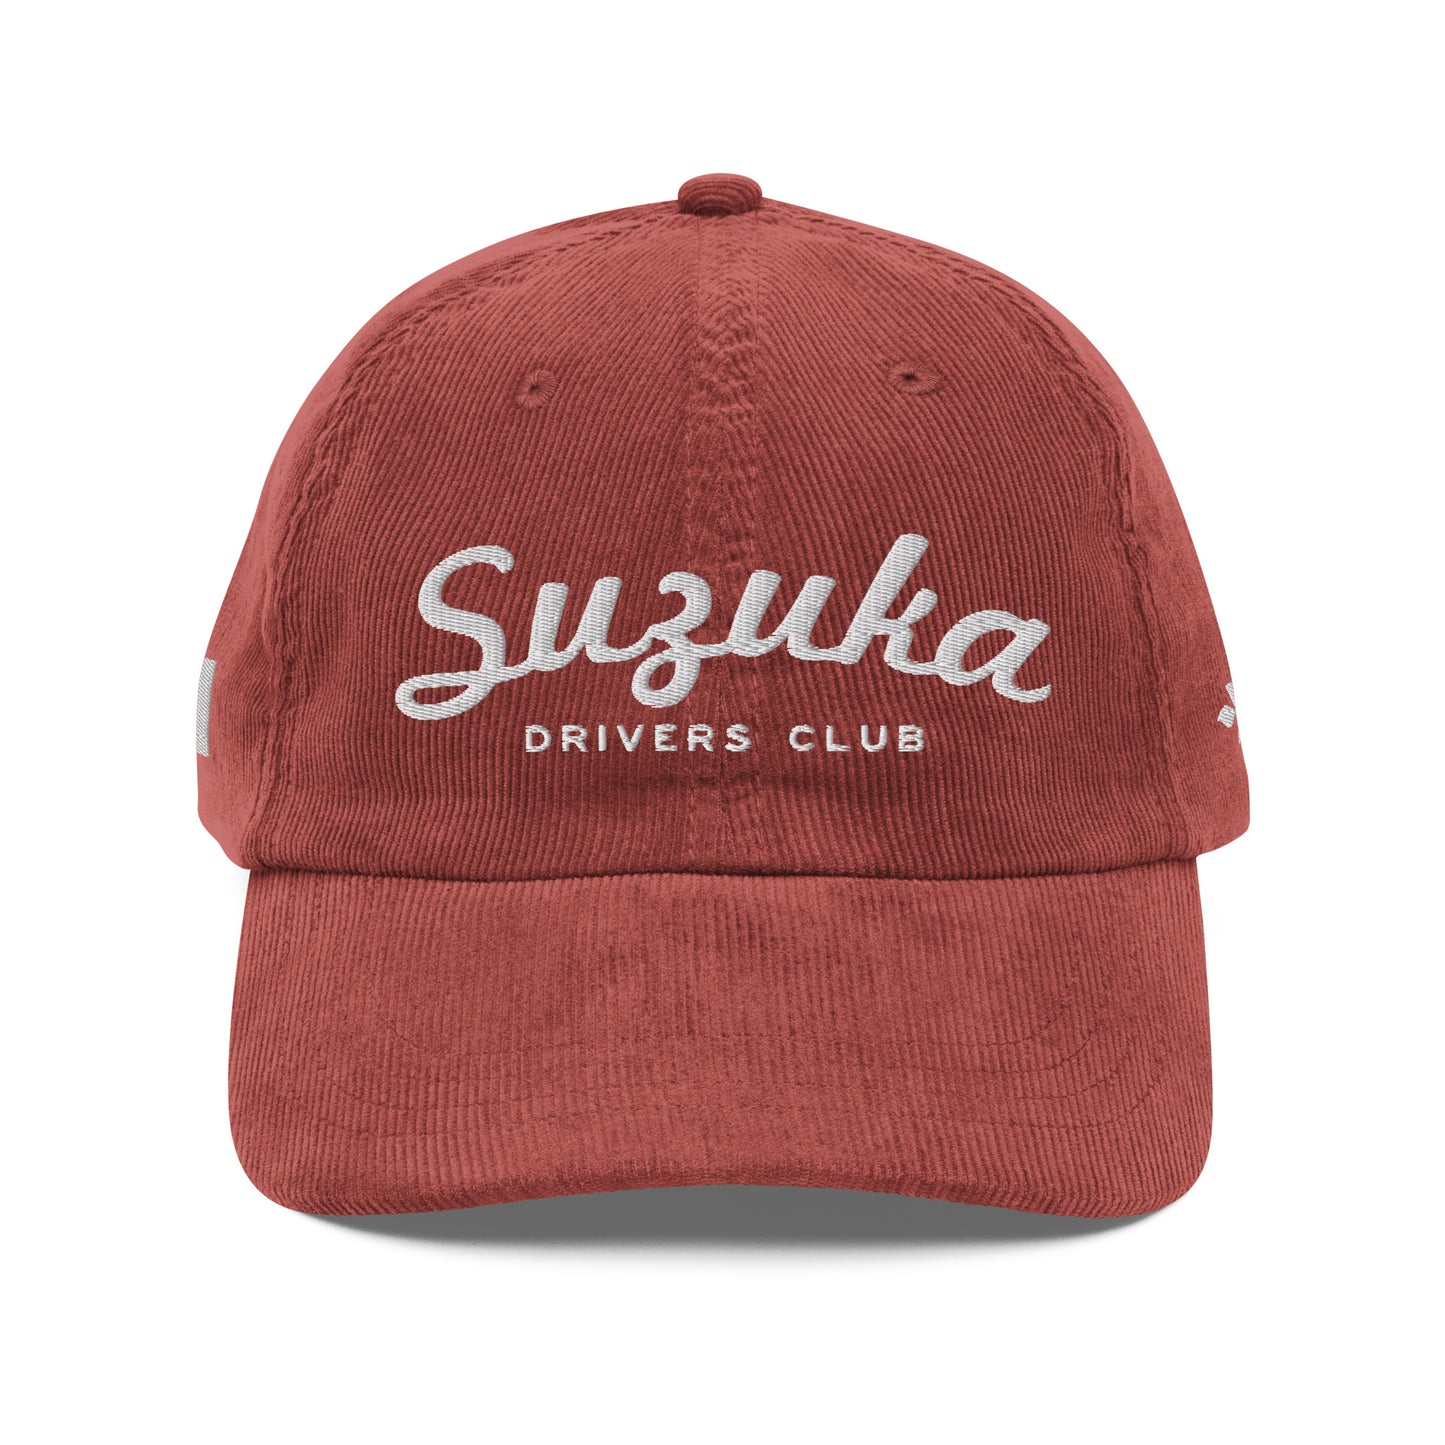 Suzuka Drivers Club Corduroy Hat